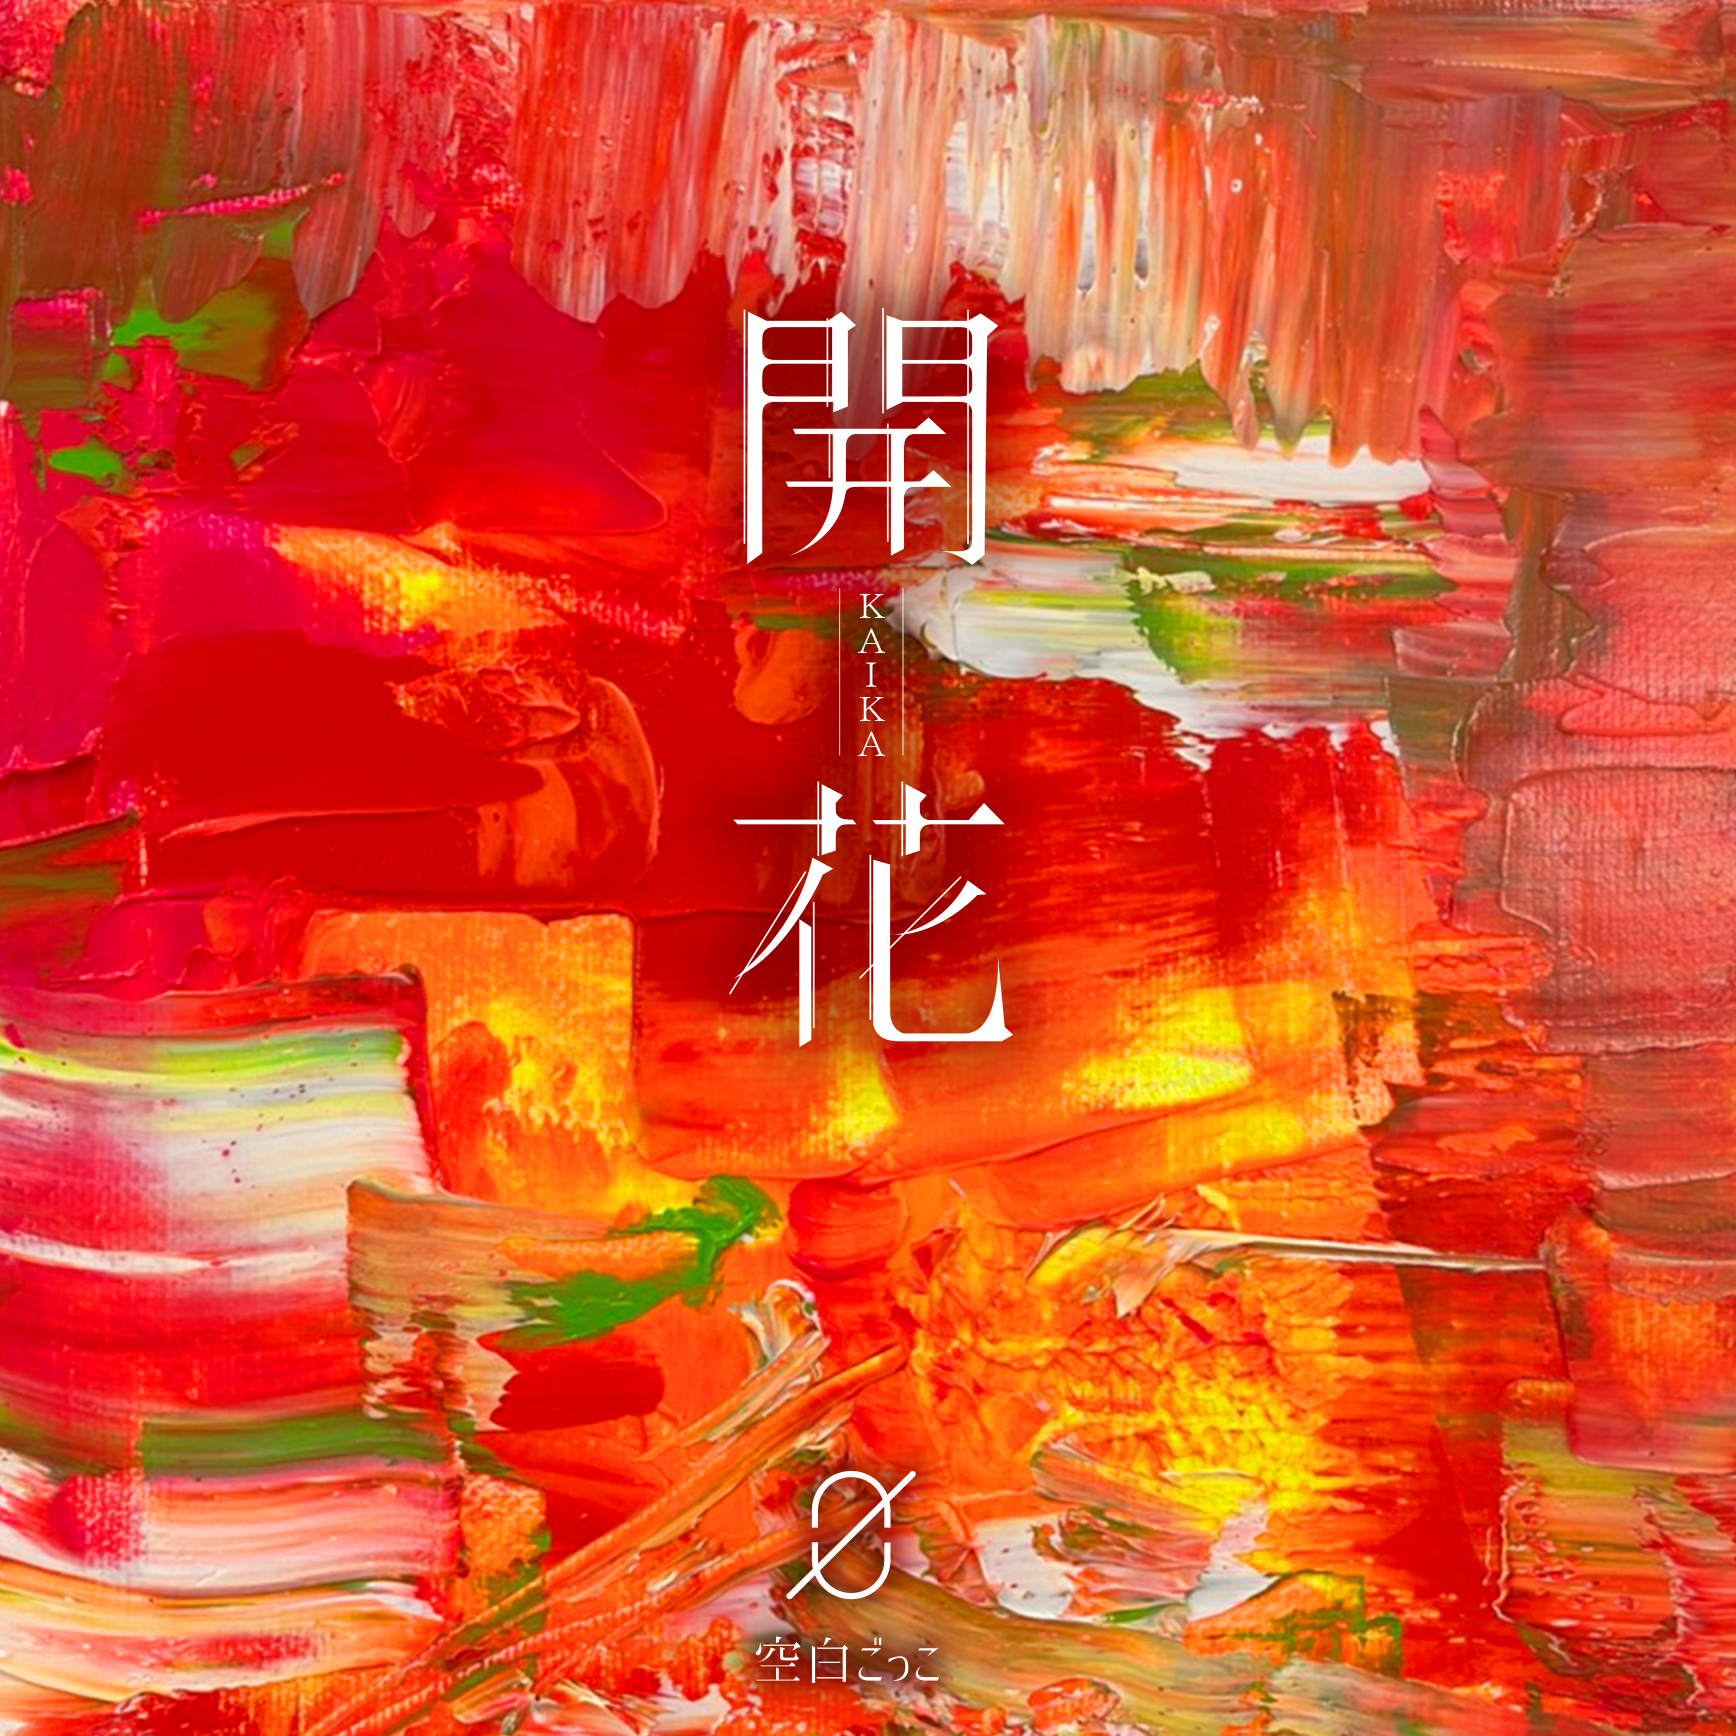 Kuhaku Gokko 2nd Album "Kaika" Normal Edition (CD) Release on Oct 20,2021 No.1